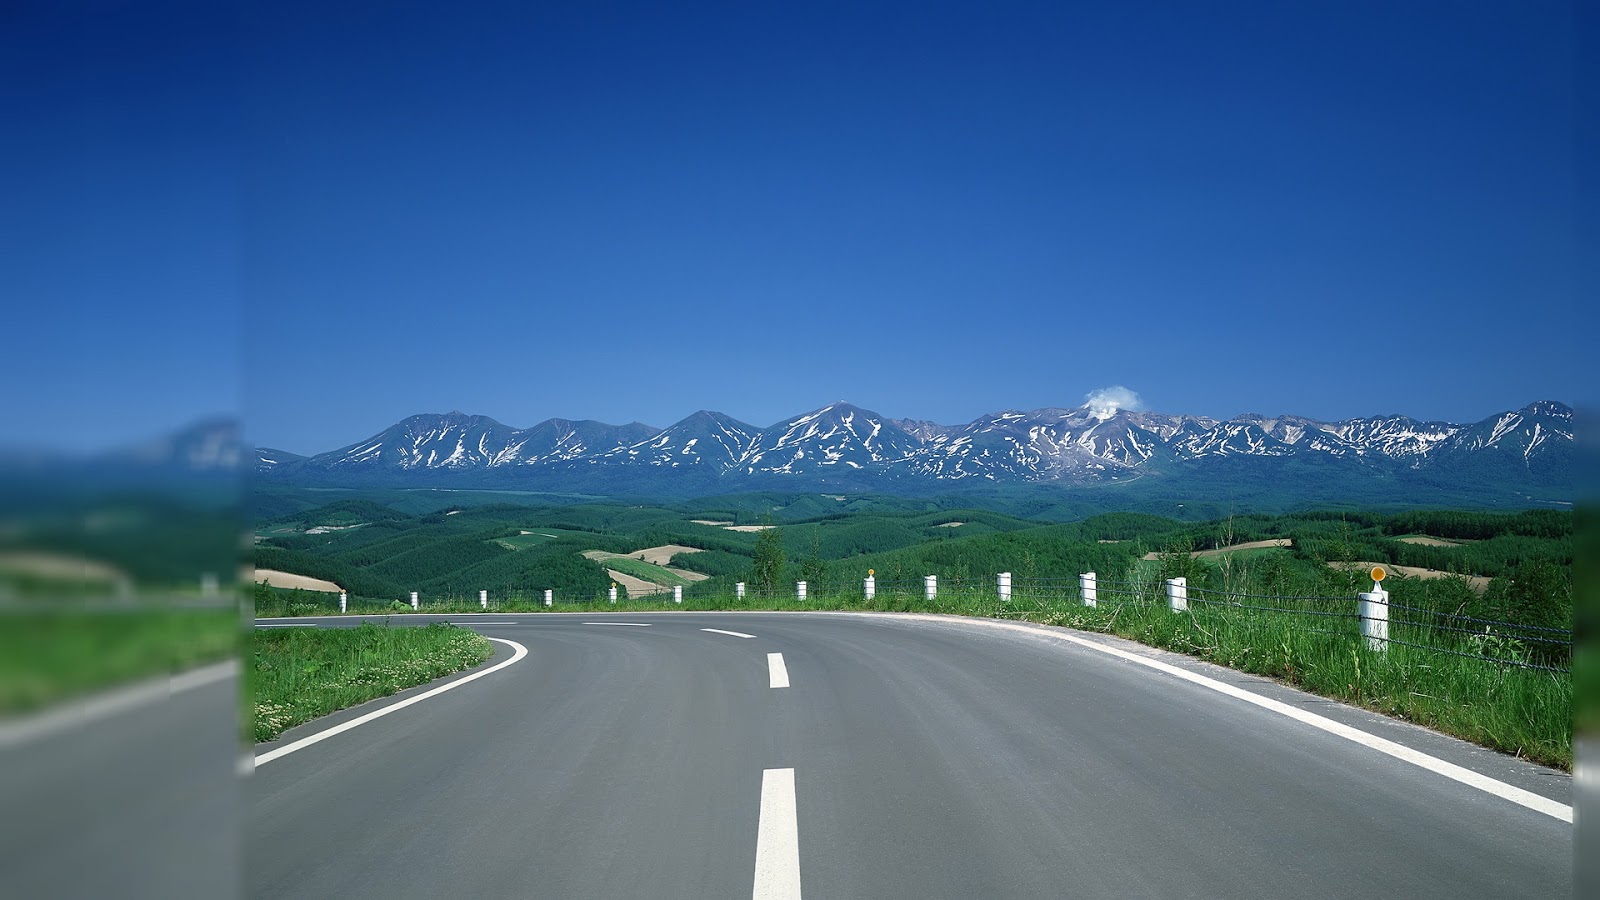 new wallpaper images download,road,highway,mountainous landforms,asphalt,freeway